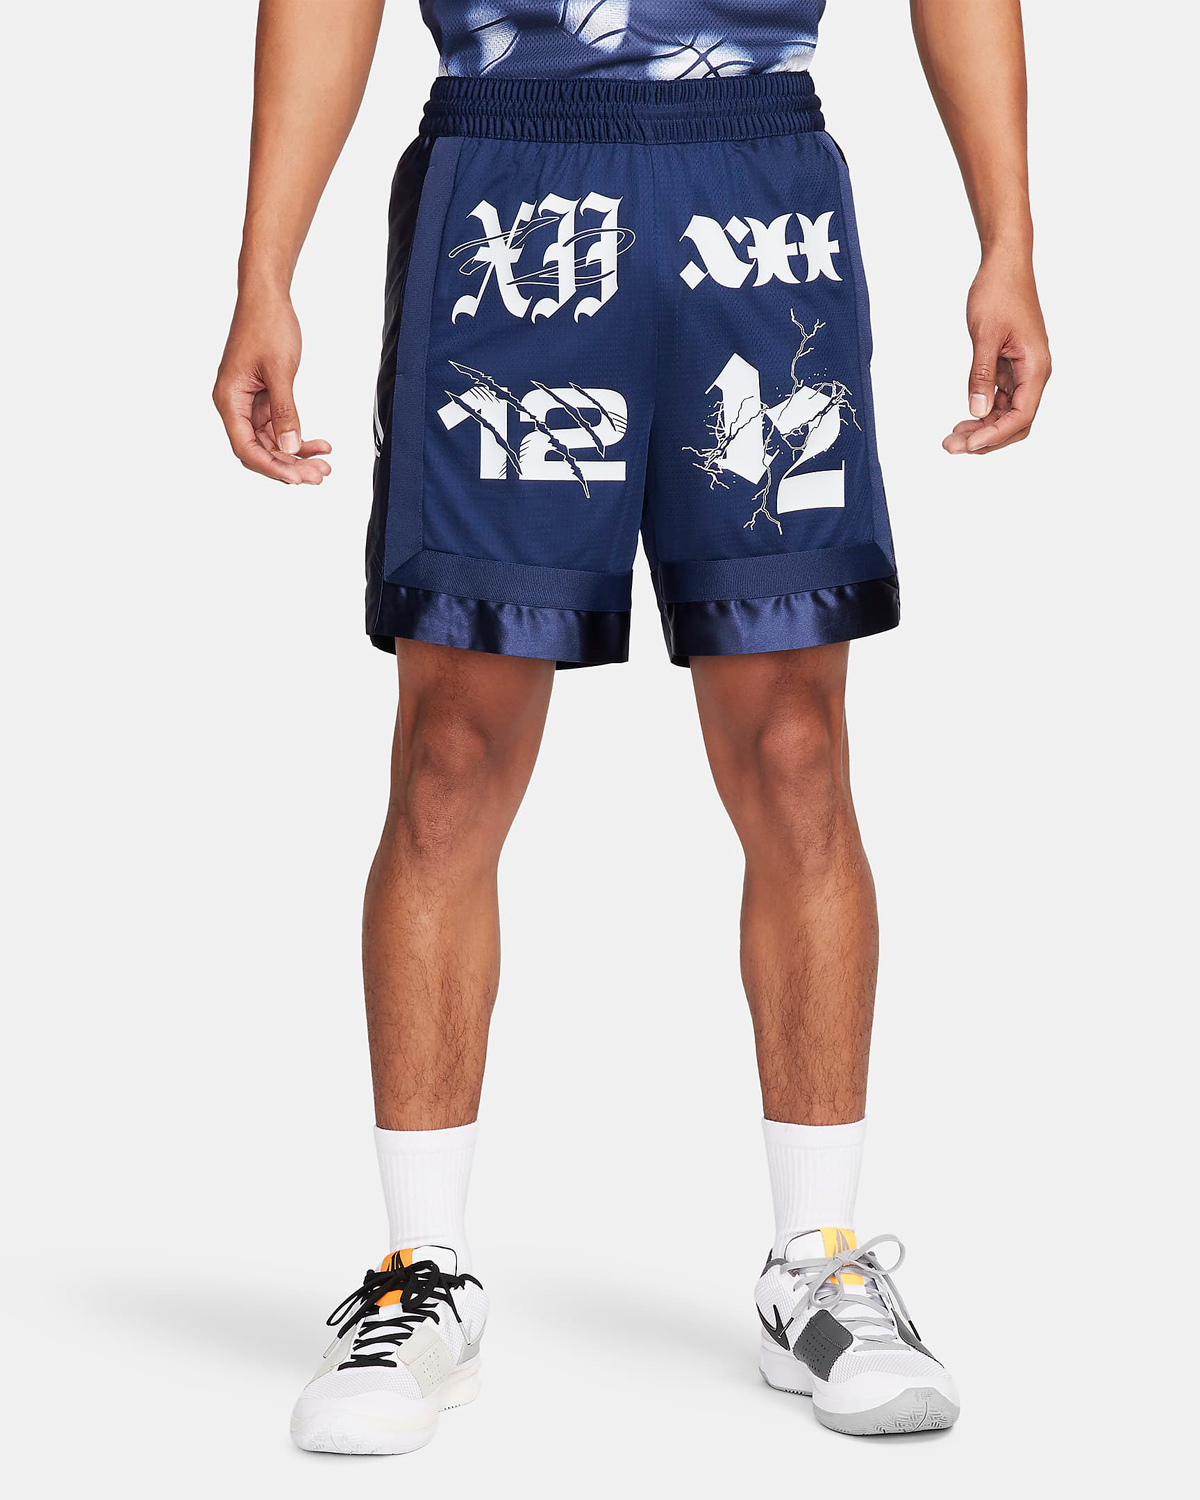 Nike-Ja-DNA-Basketball-Shorts-Midnight-Navy